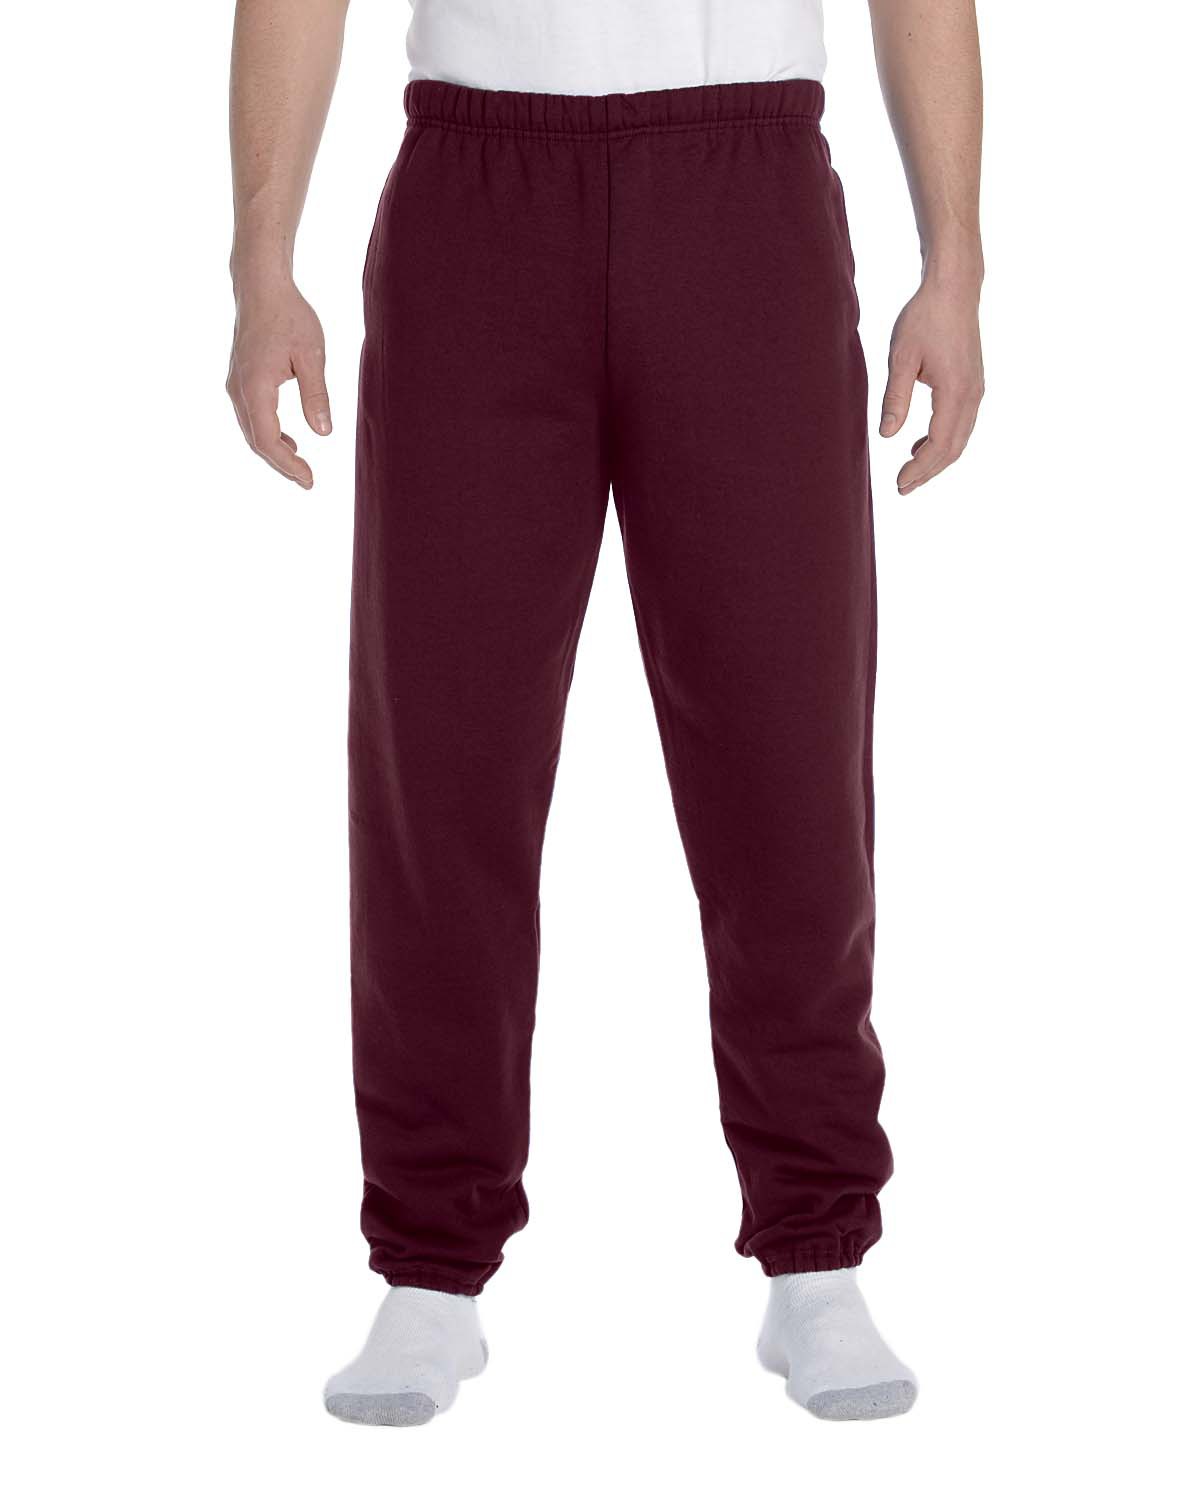 Jerzees 4850MP Super Sweats Pocketed Sweatpants $13.48 - Men's Pants